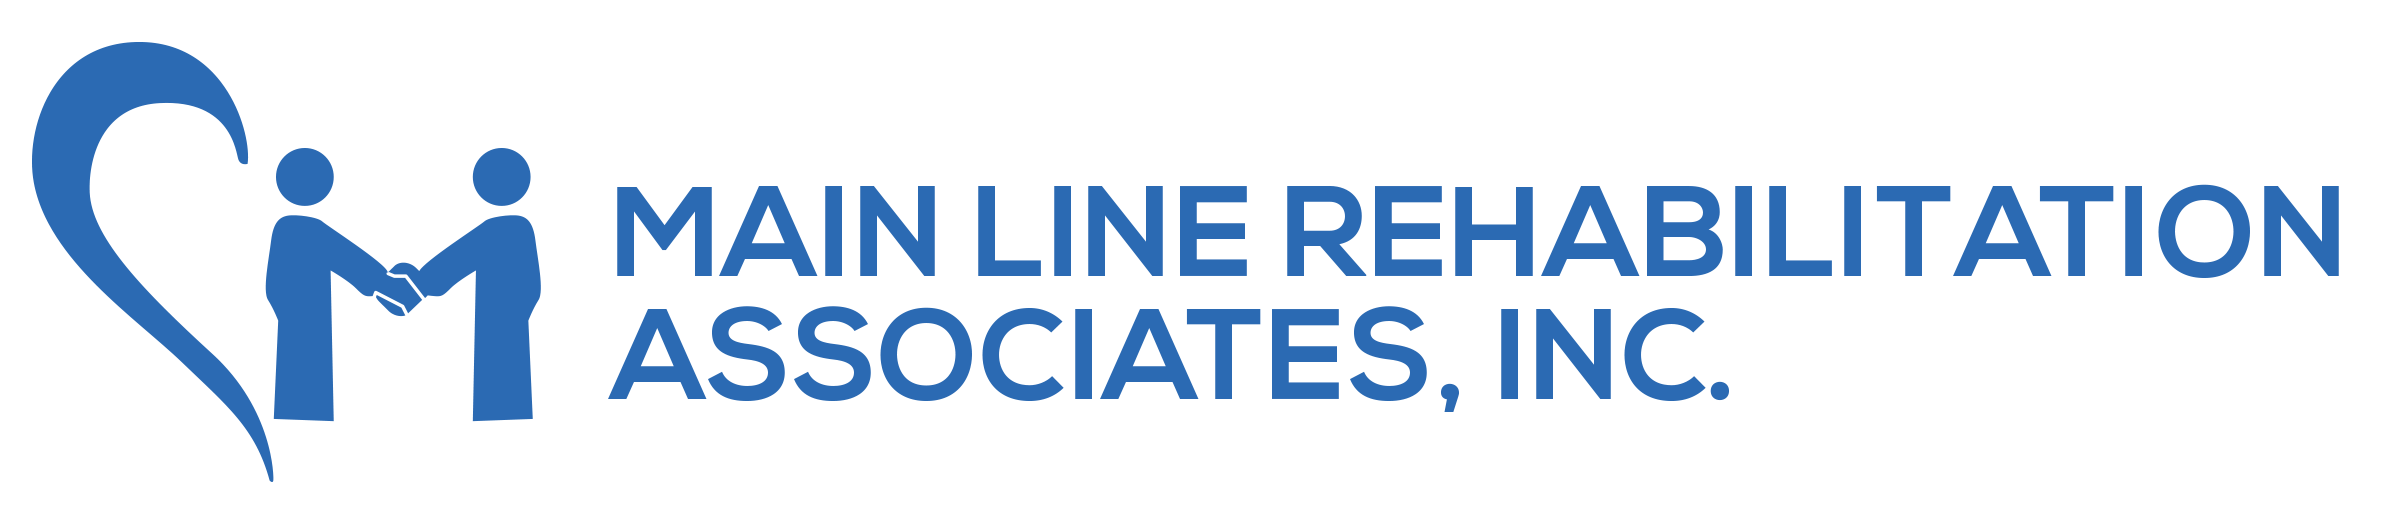 Main Line Rehabilitation Associates logo